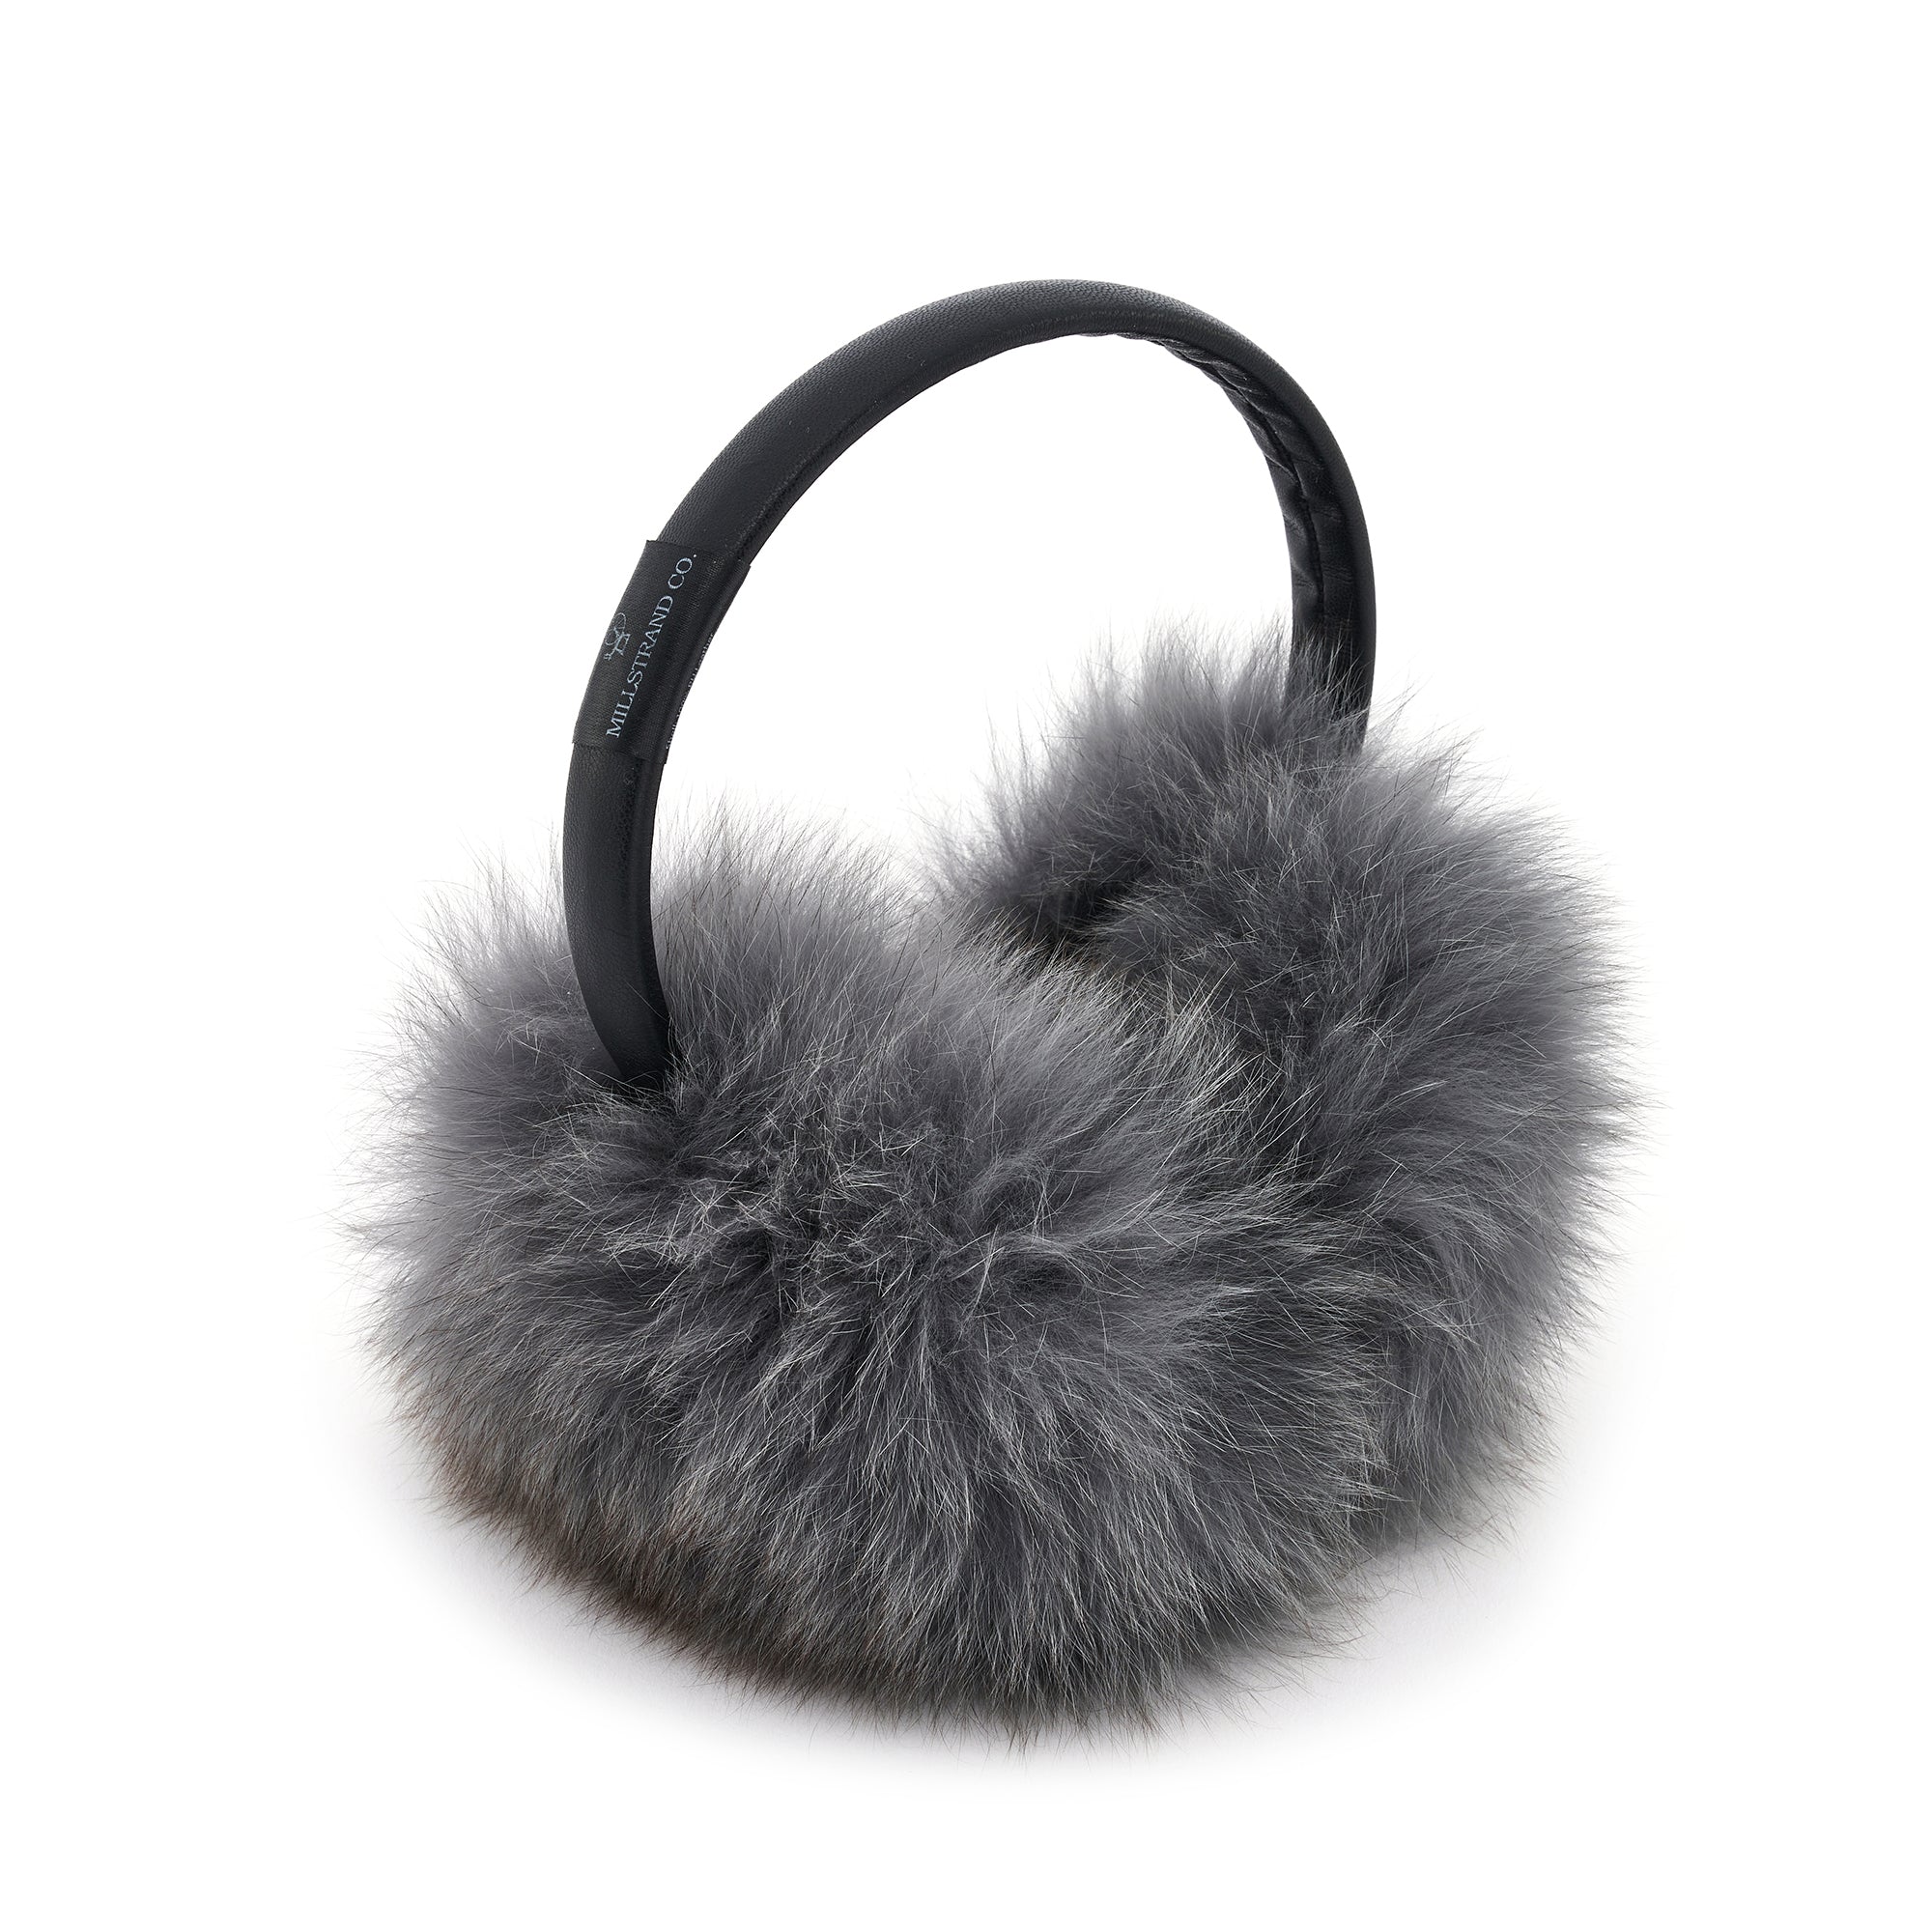 The Millstrand - Cumulus Gray Genuine Fur Earmuffs